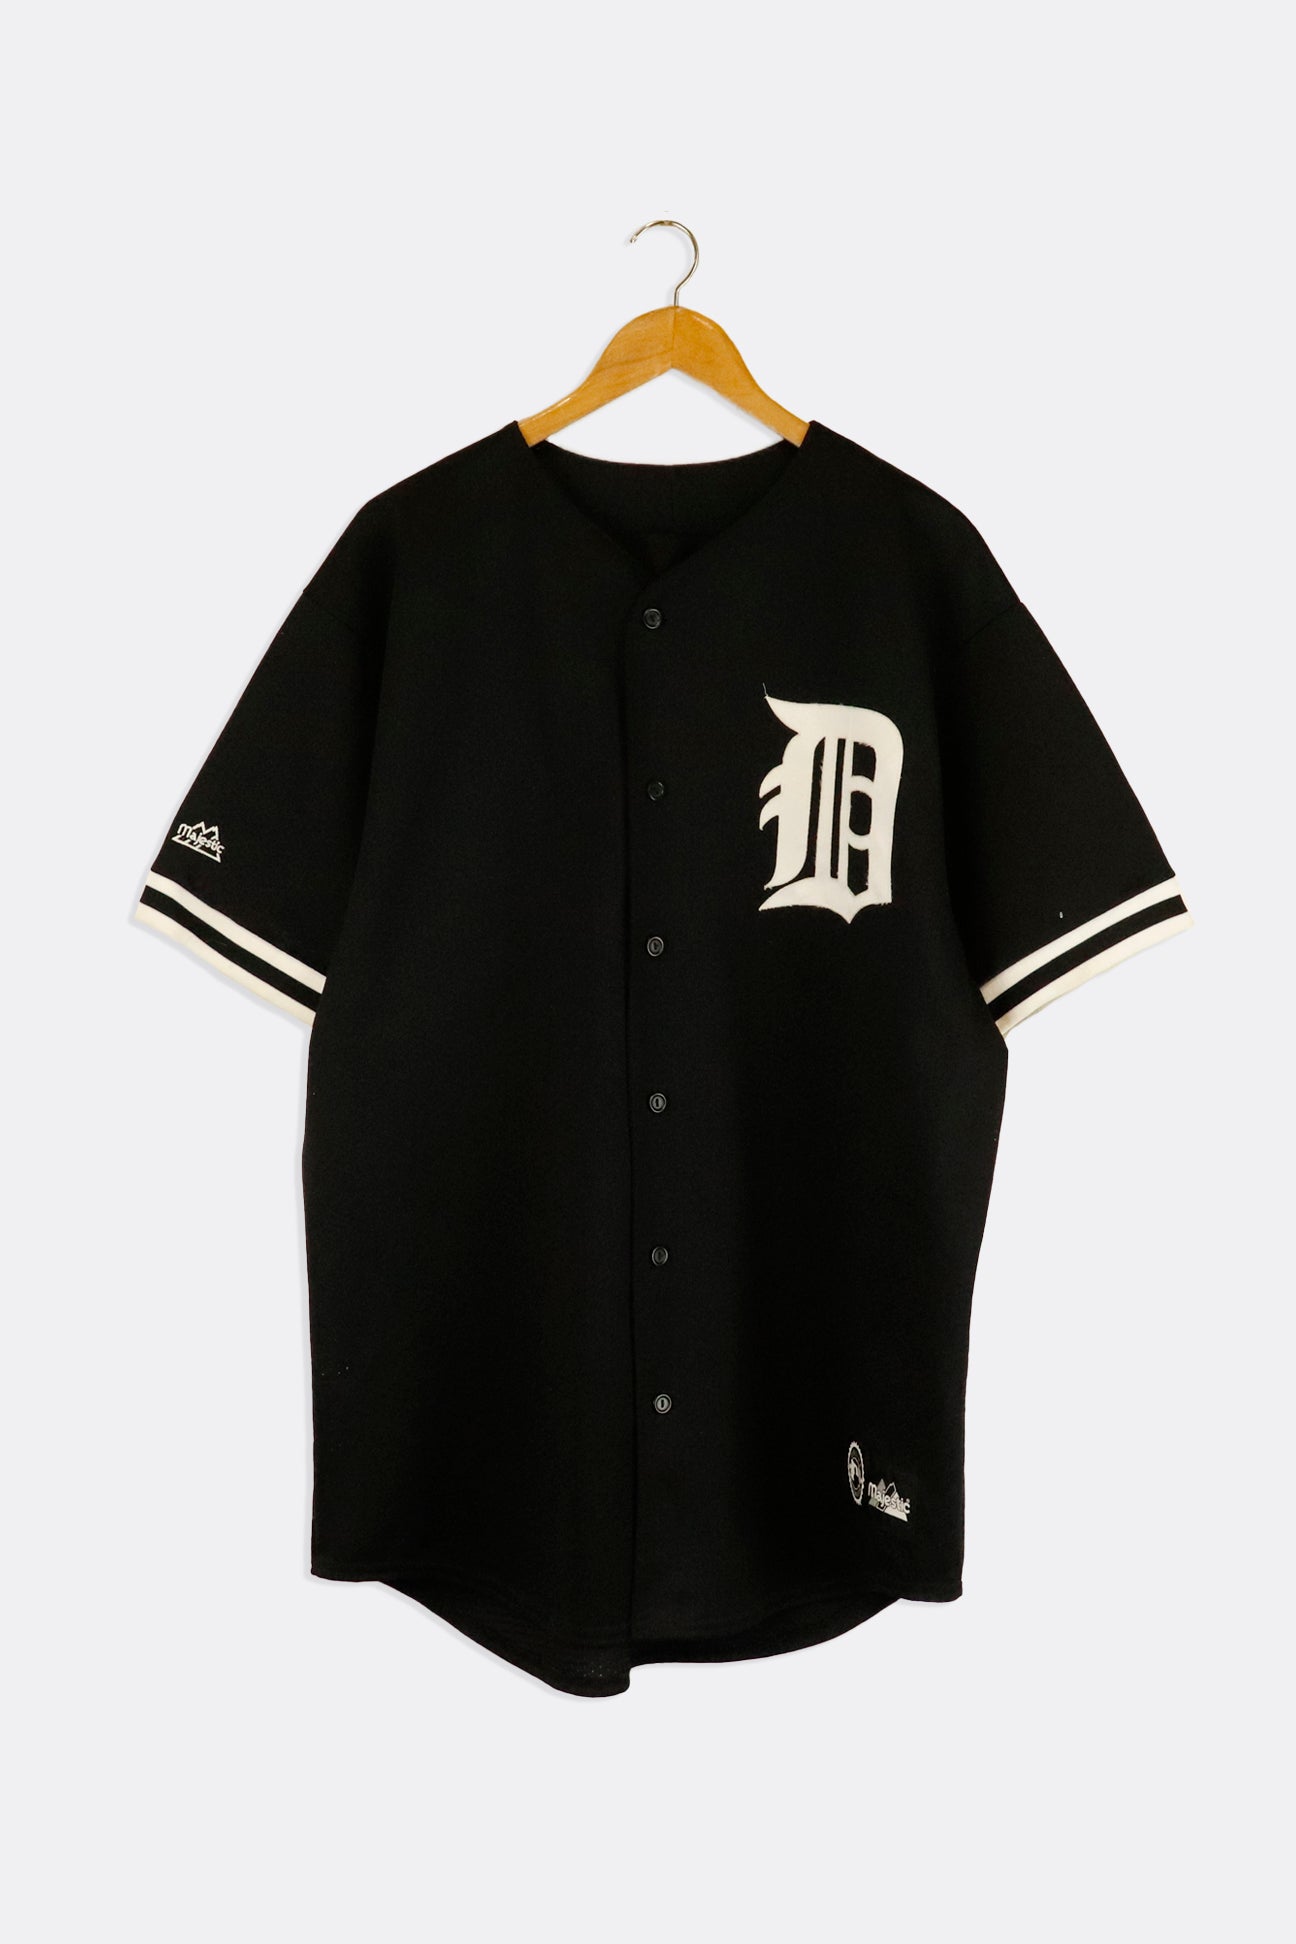 Vintage non-professional baseball jersey